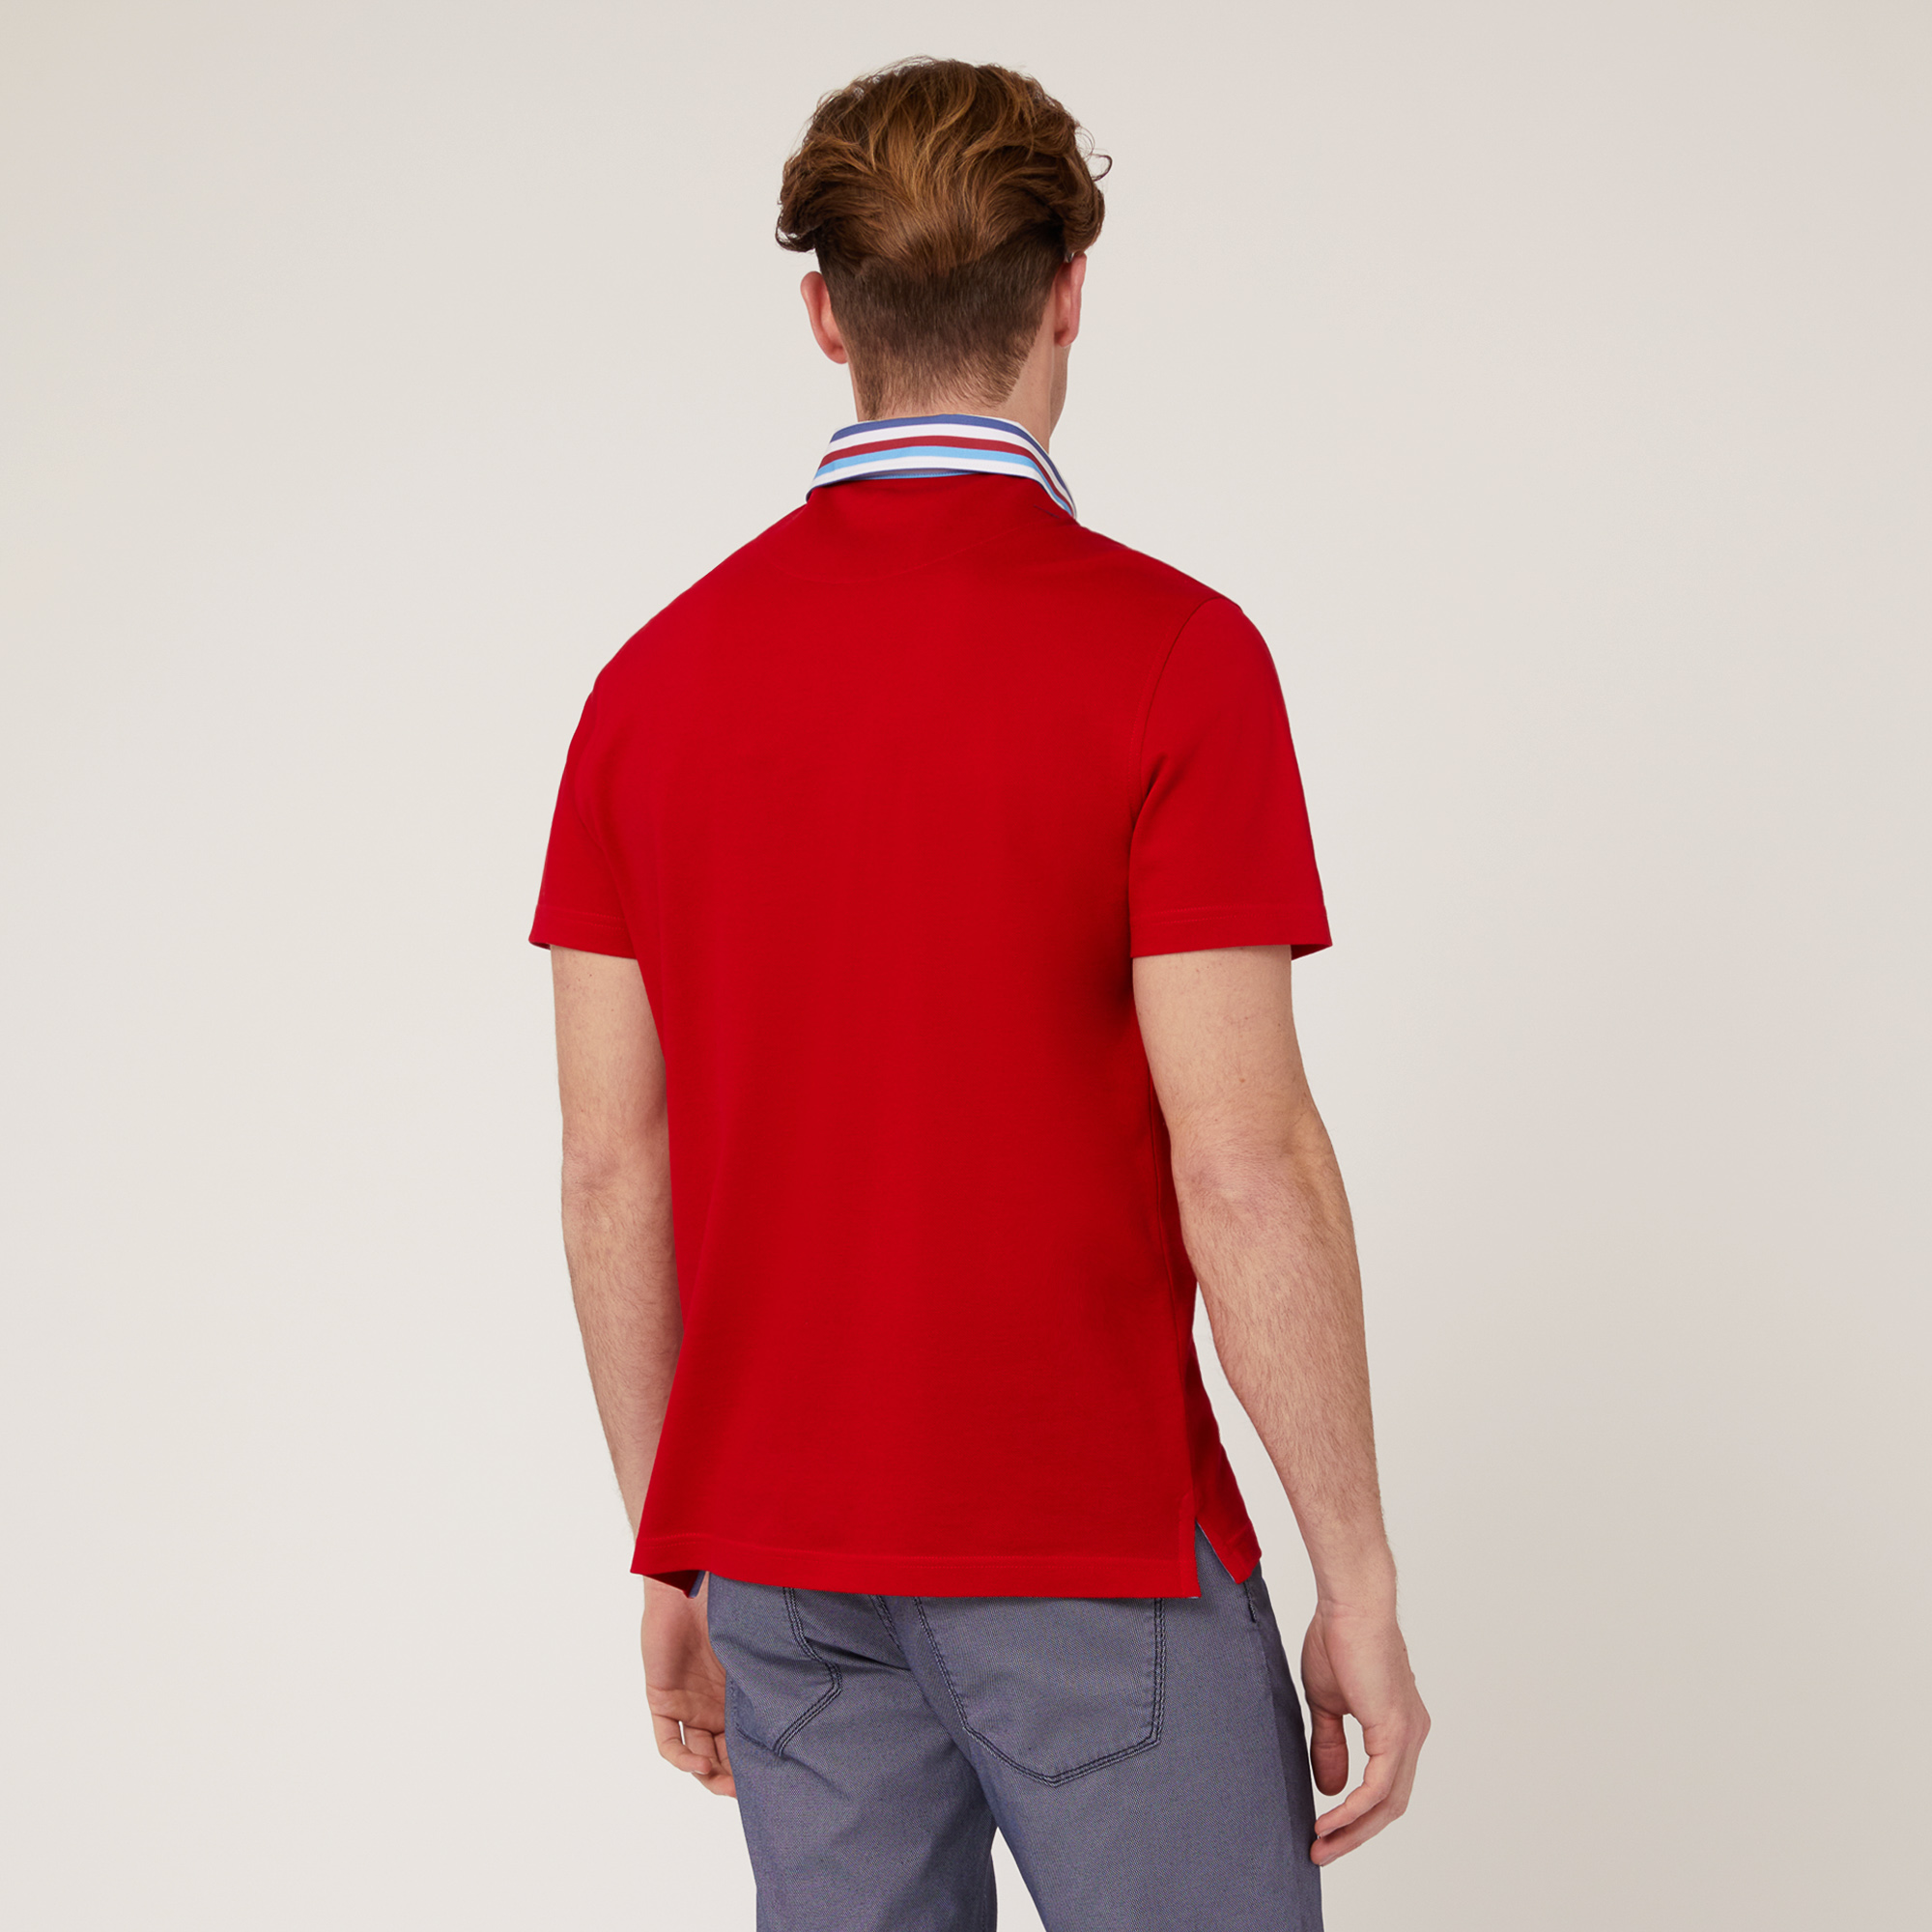 Poloshirt Vietri mit mehrfarbigem Kragen, Rot, large image number 1